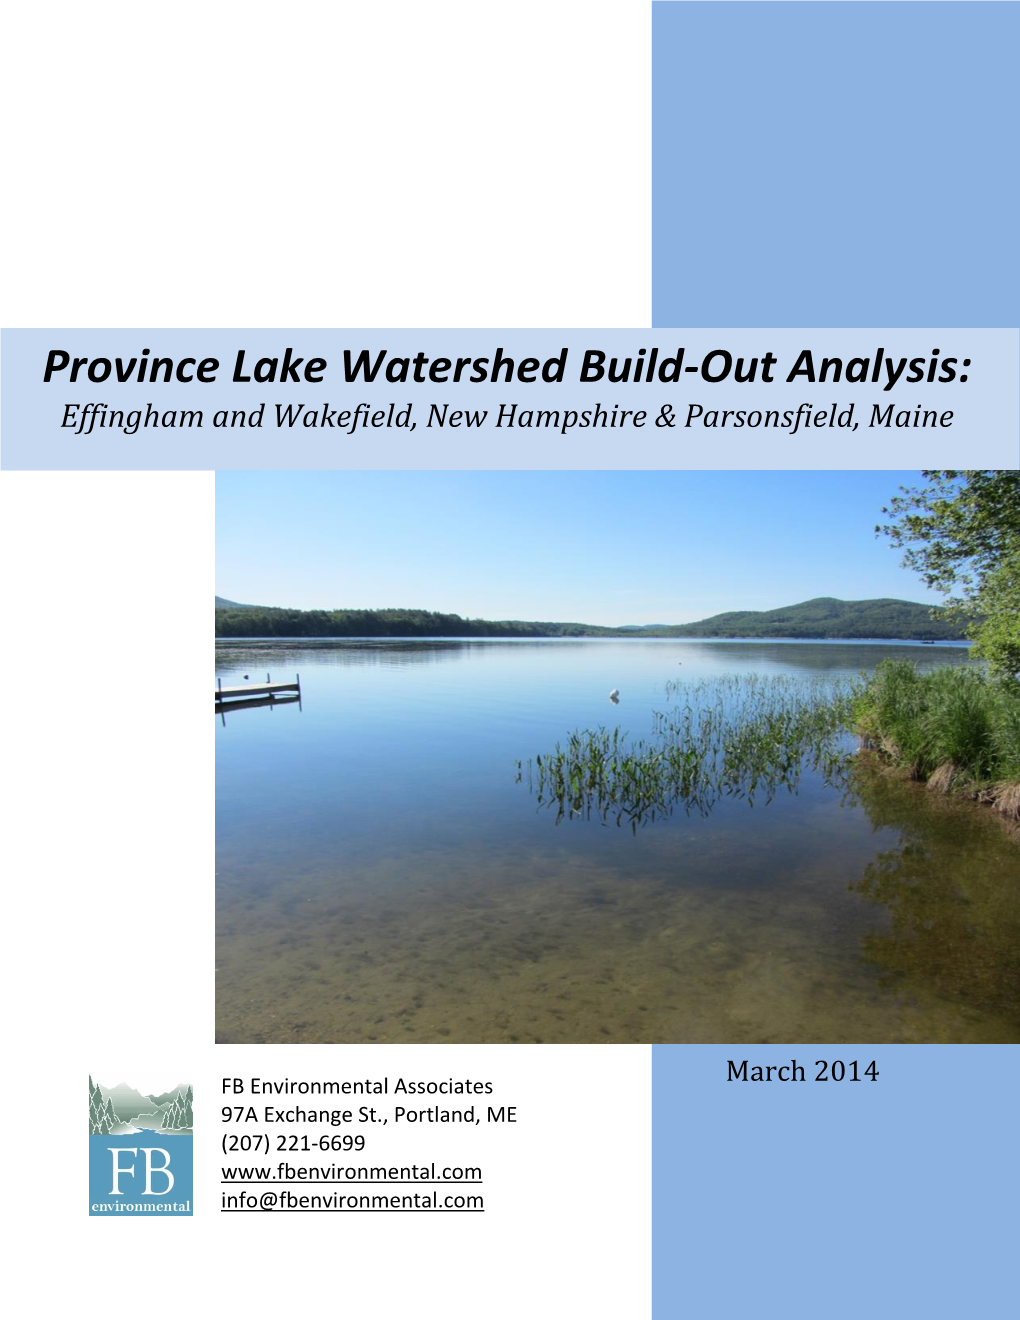 Province Lake Buildout Analysis